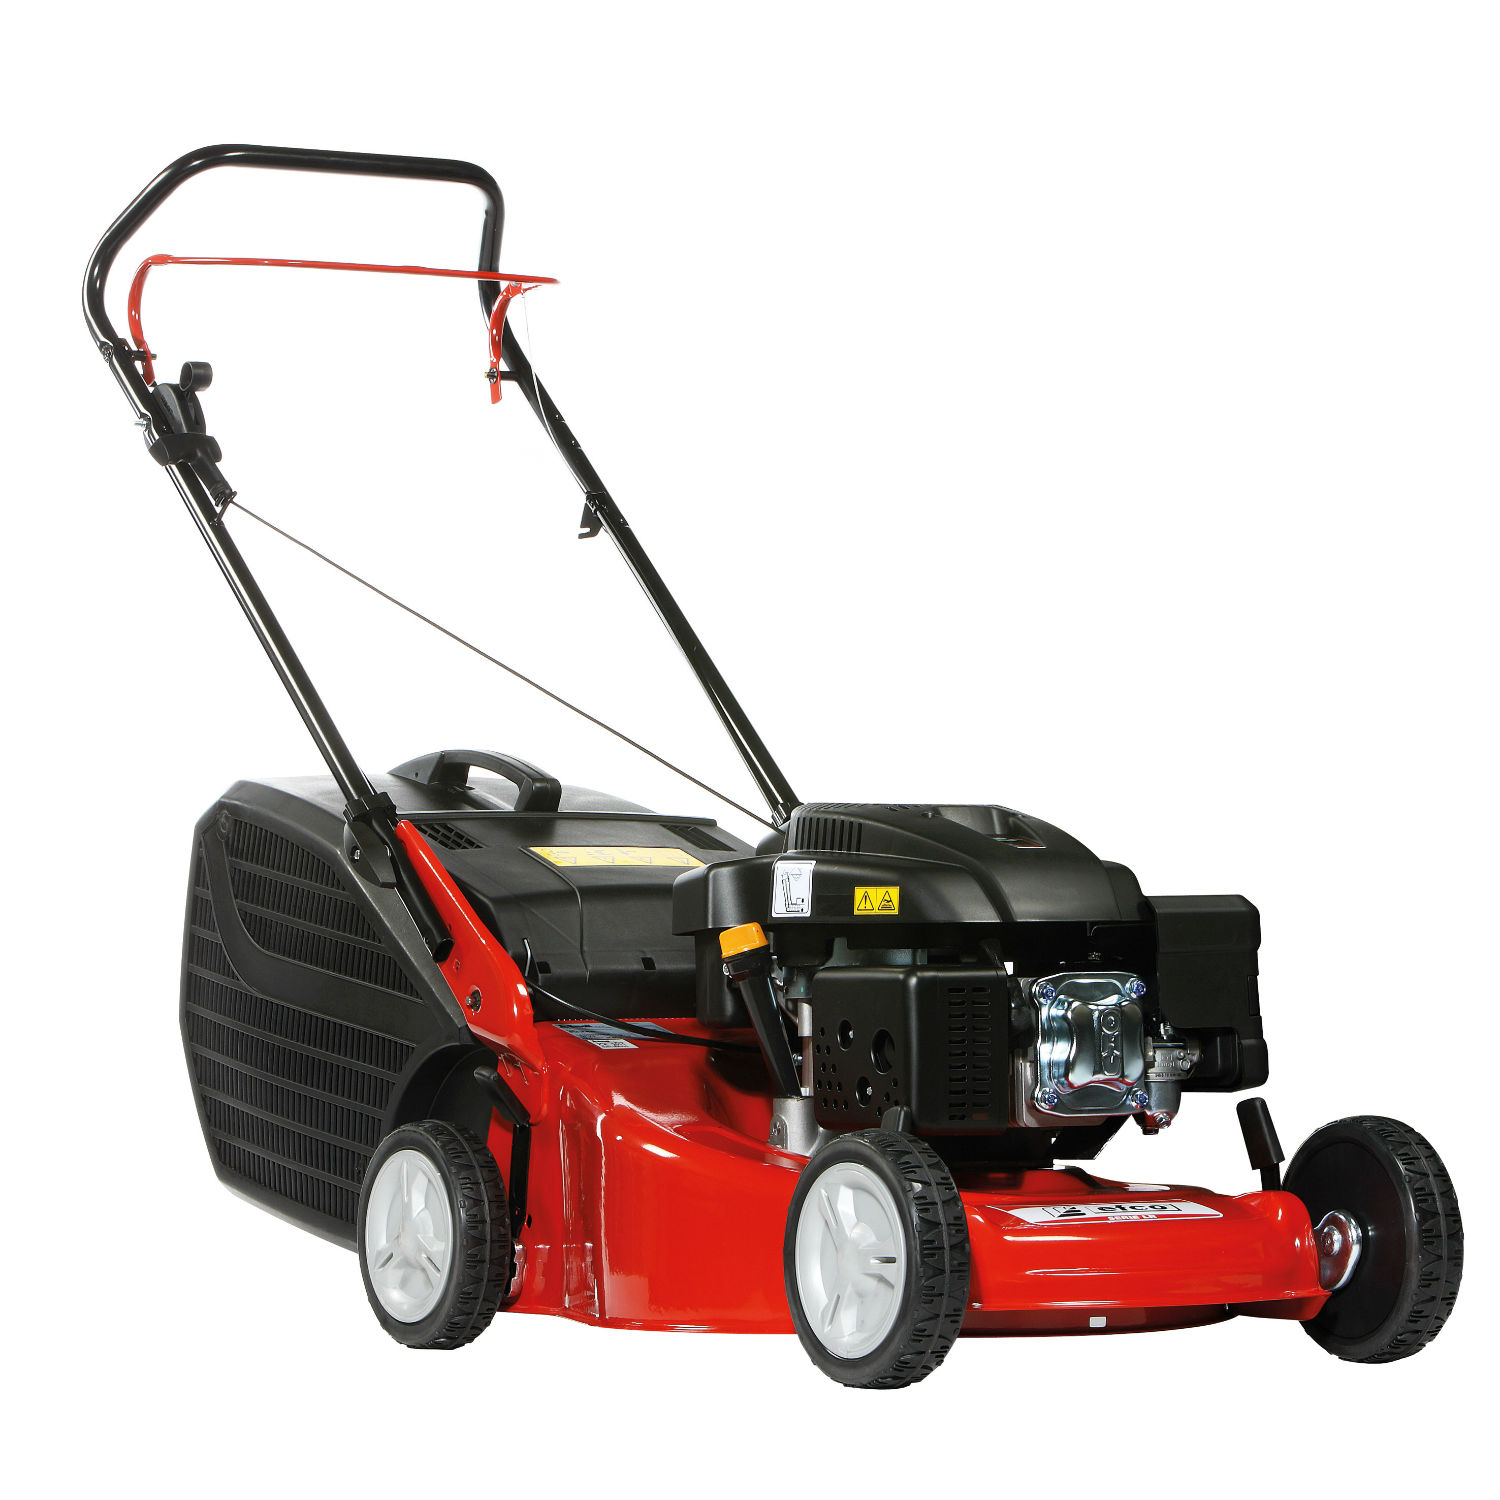 Efco LR48 PK 3 in 1 Petrol Push Lawn Mower Special Offer